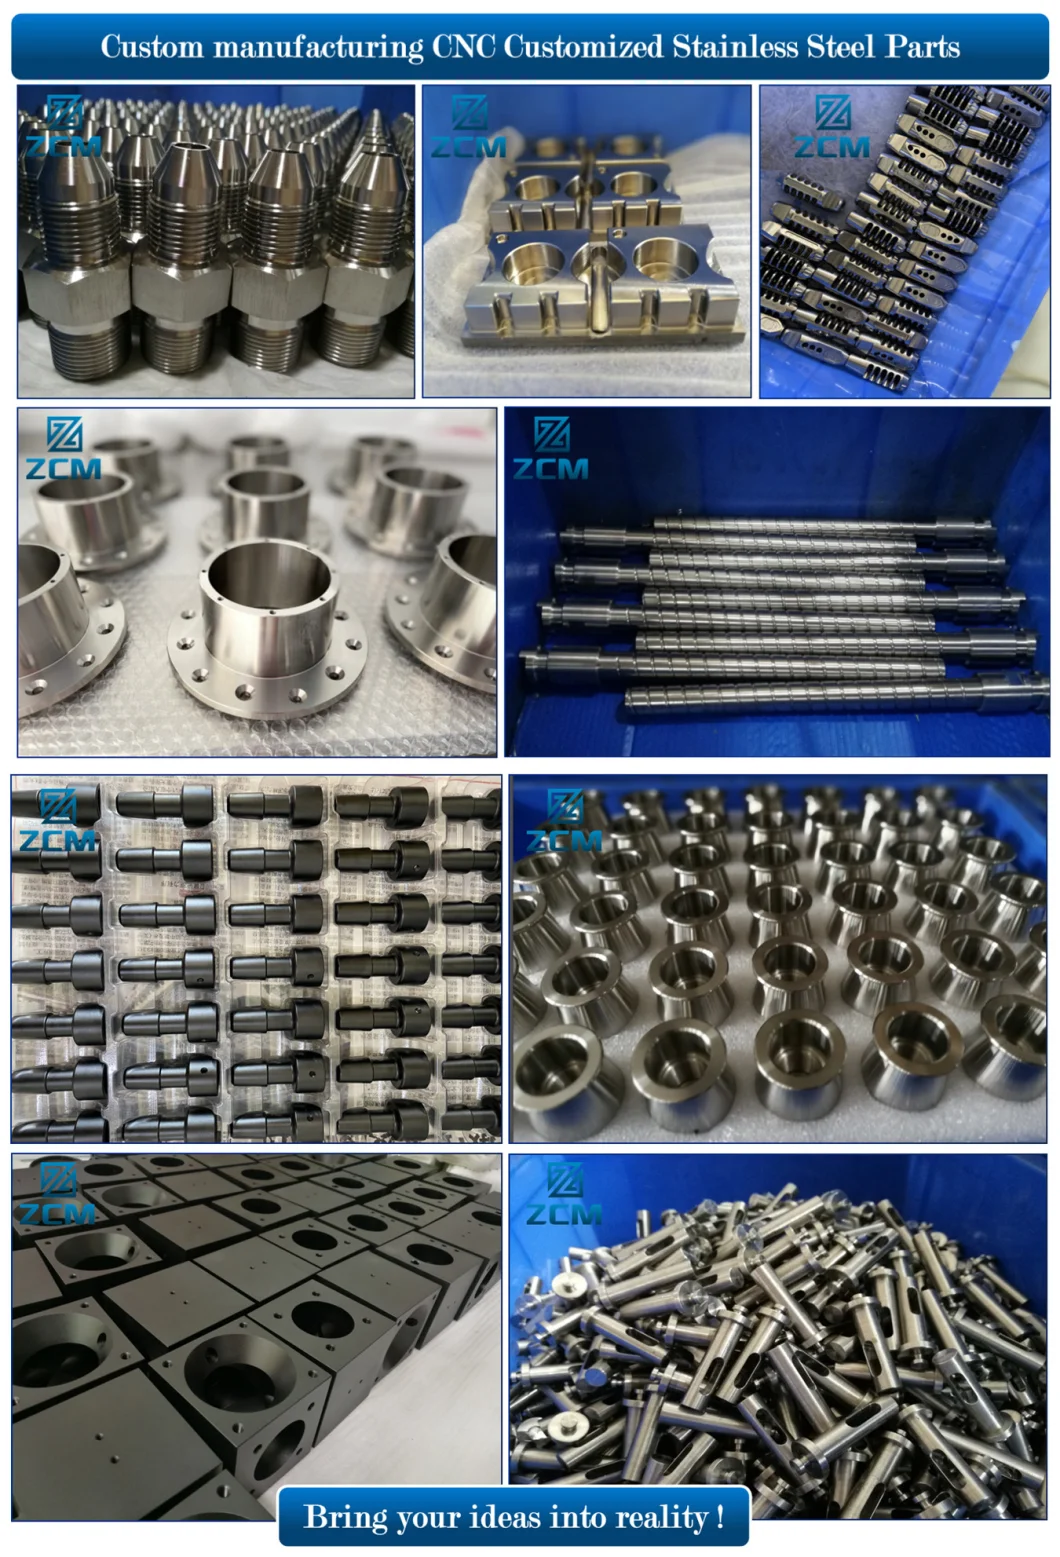 Shenzhen Custom Manufactured Metal CNC Stainless Steel Titanium Machining Aluminum/Stainless Steel/Titanium Alloy Automotive Auto Vehicle Car Wheel Studs Bolts